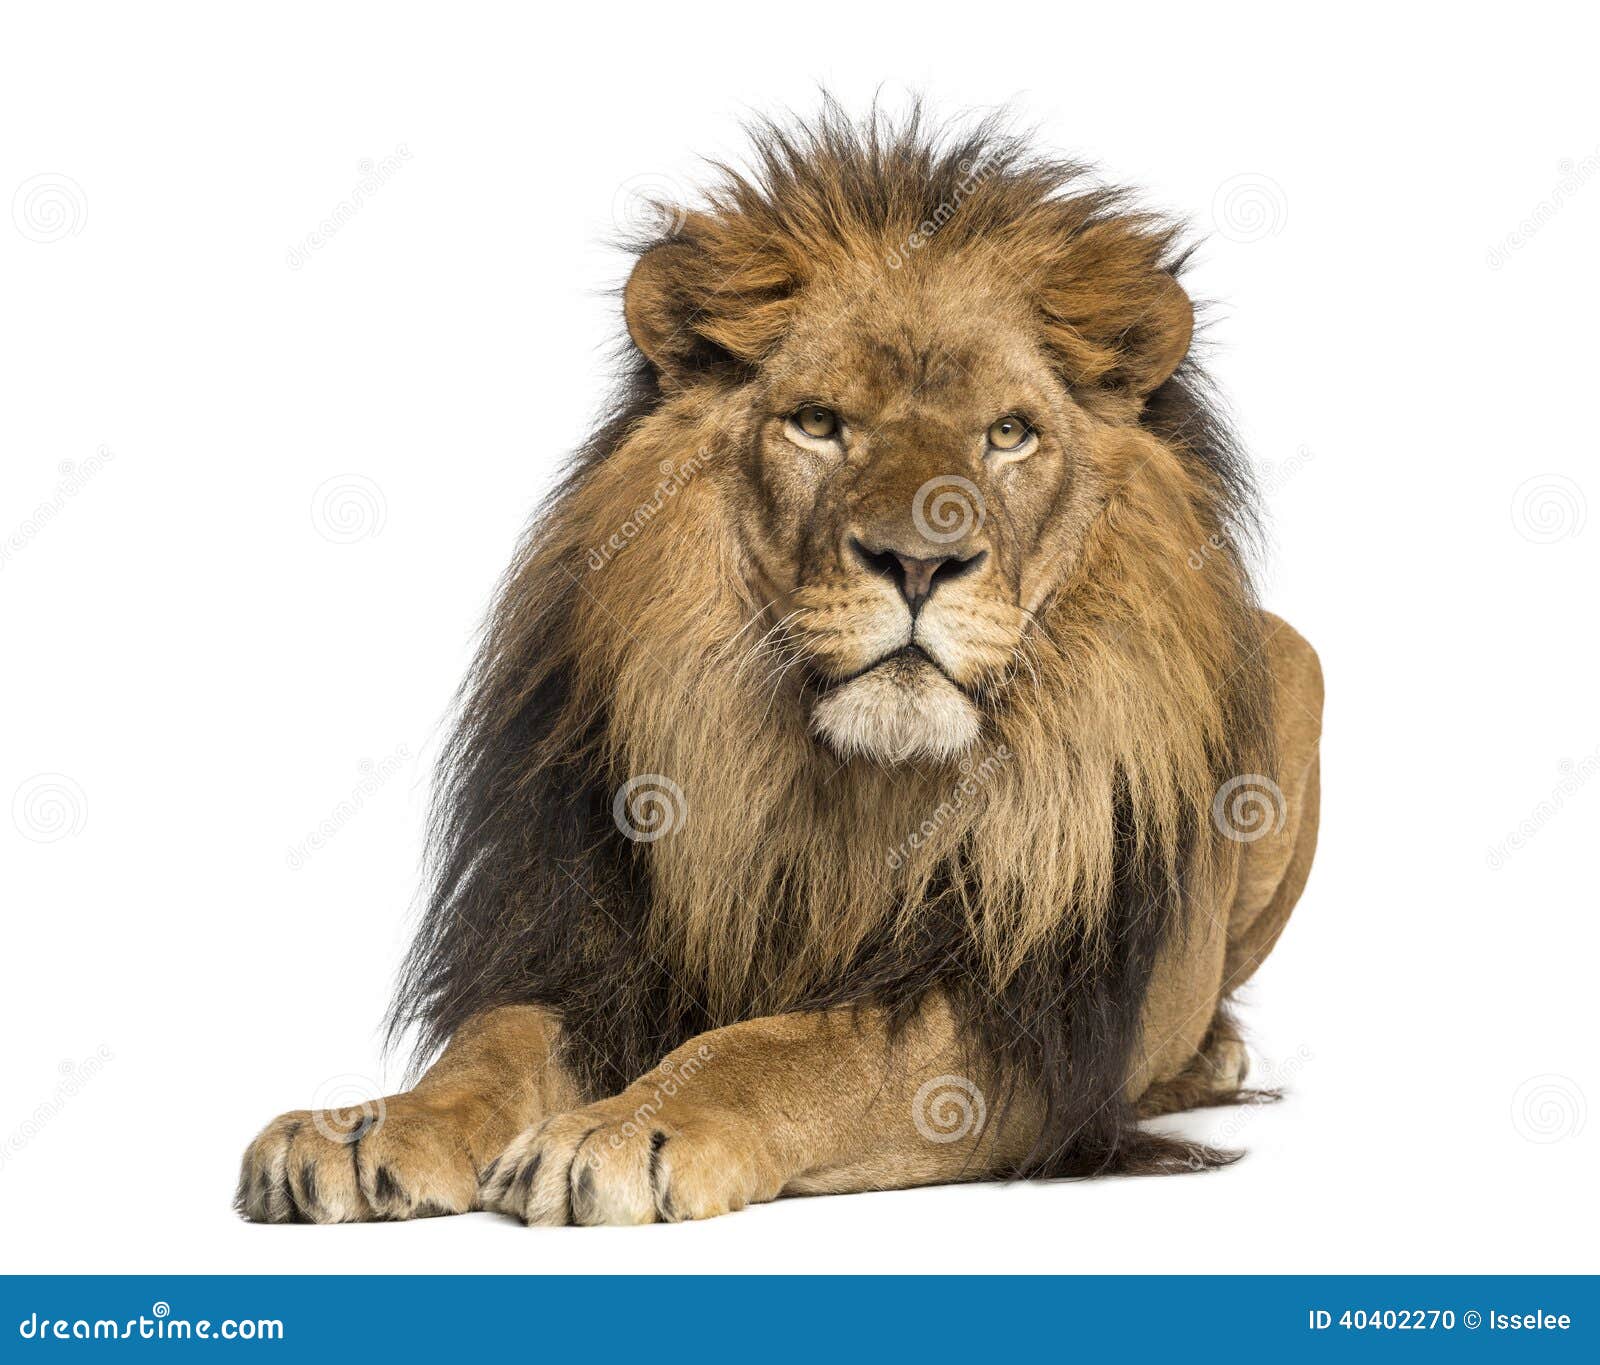 lion lying down, facing, panthera leo, 10 years old